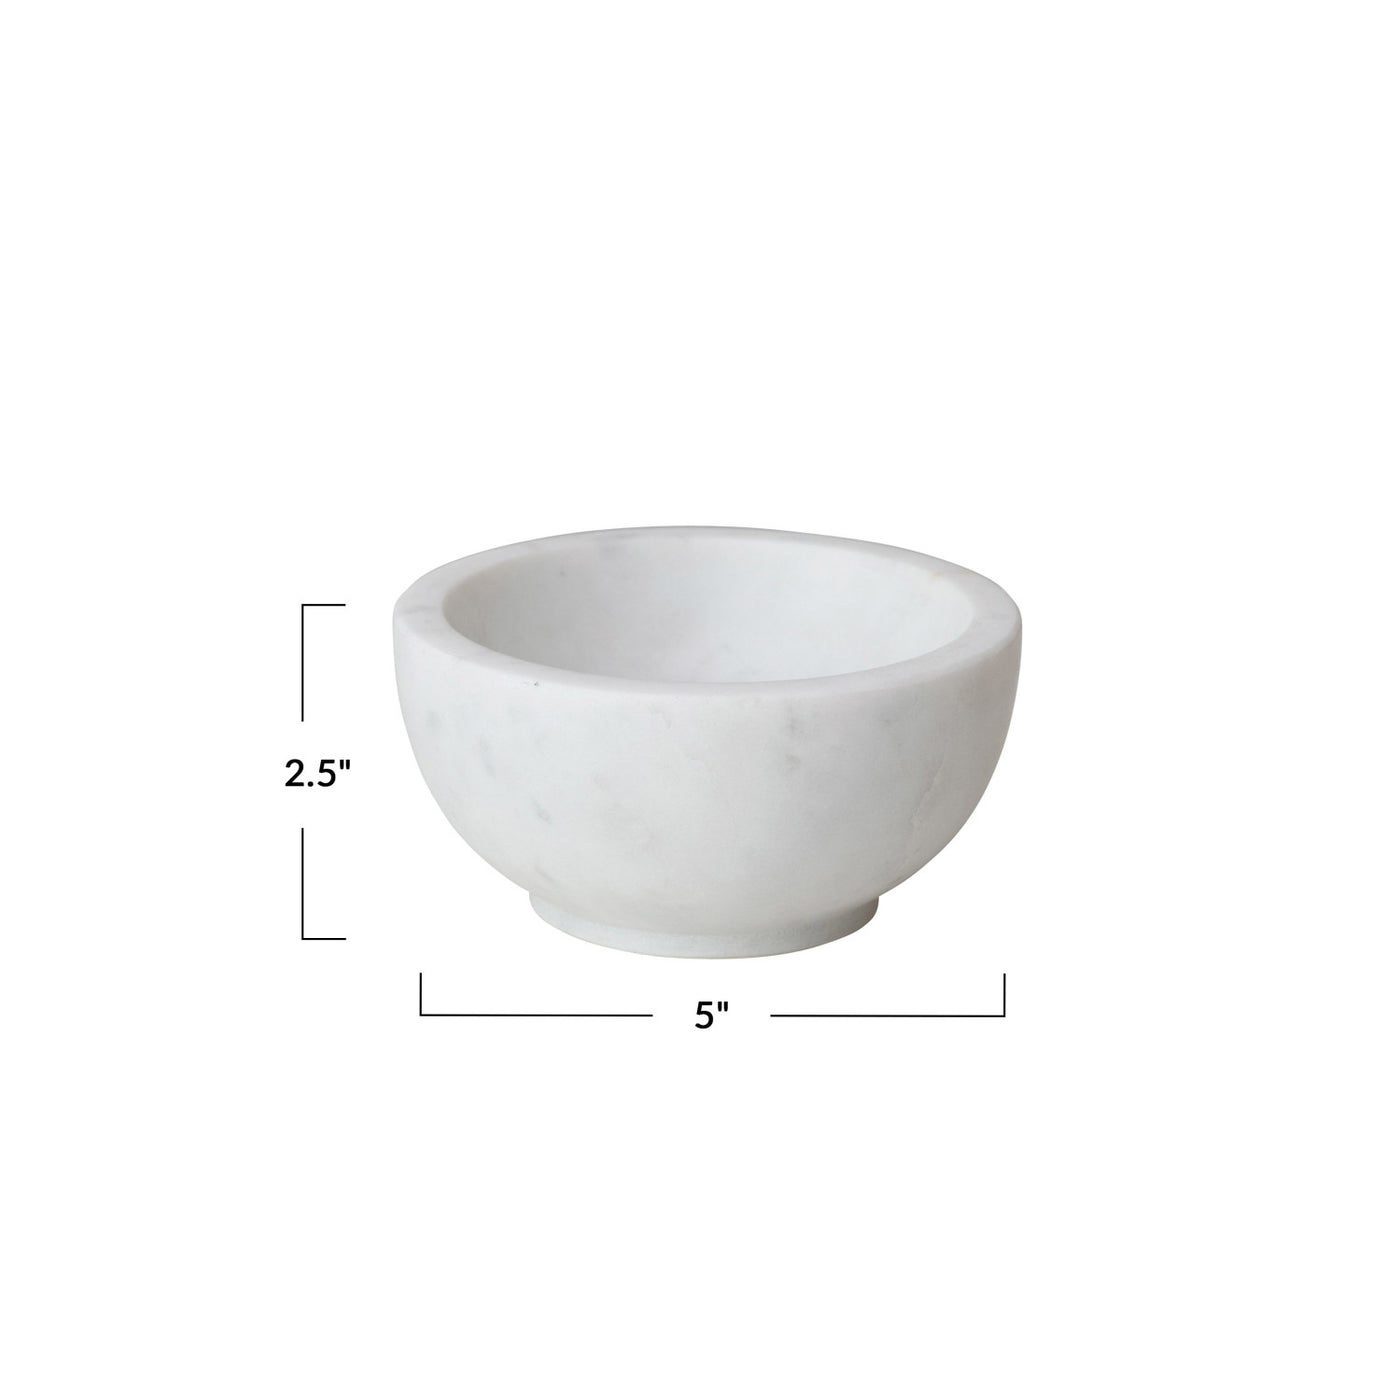 5" Round Marble Bowl